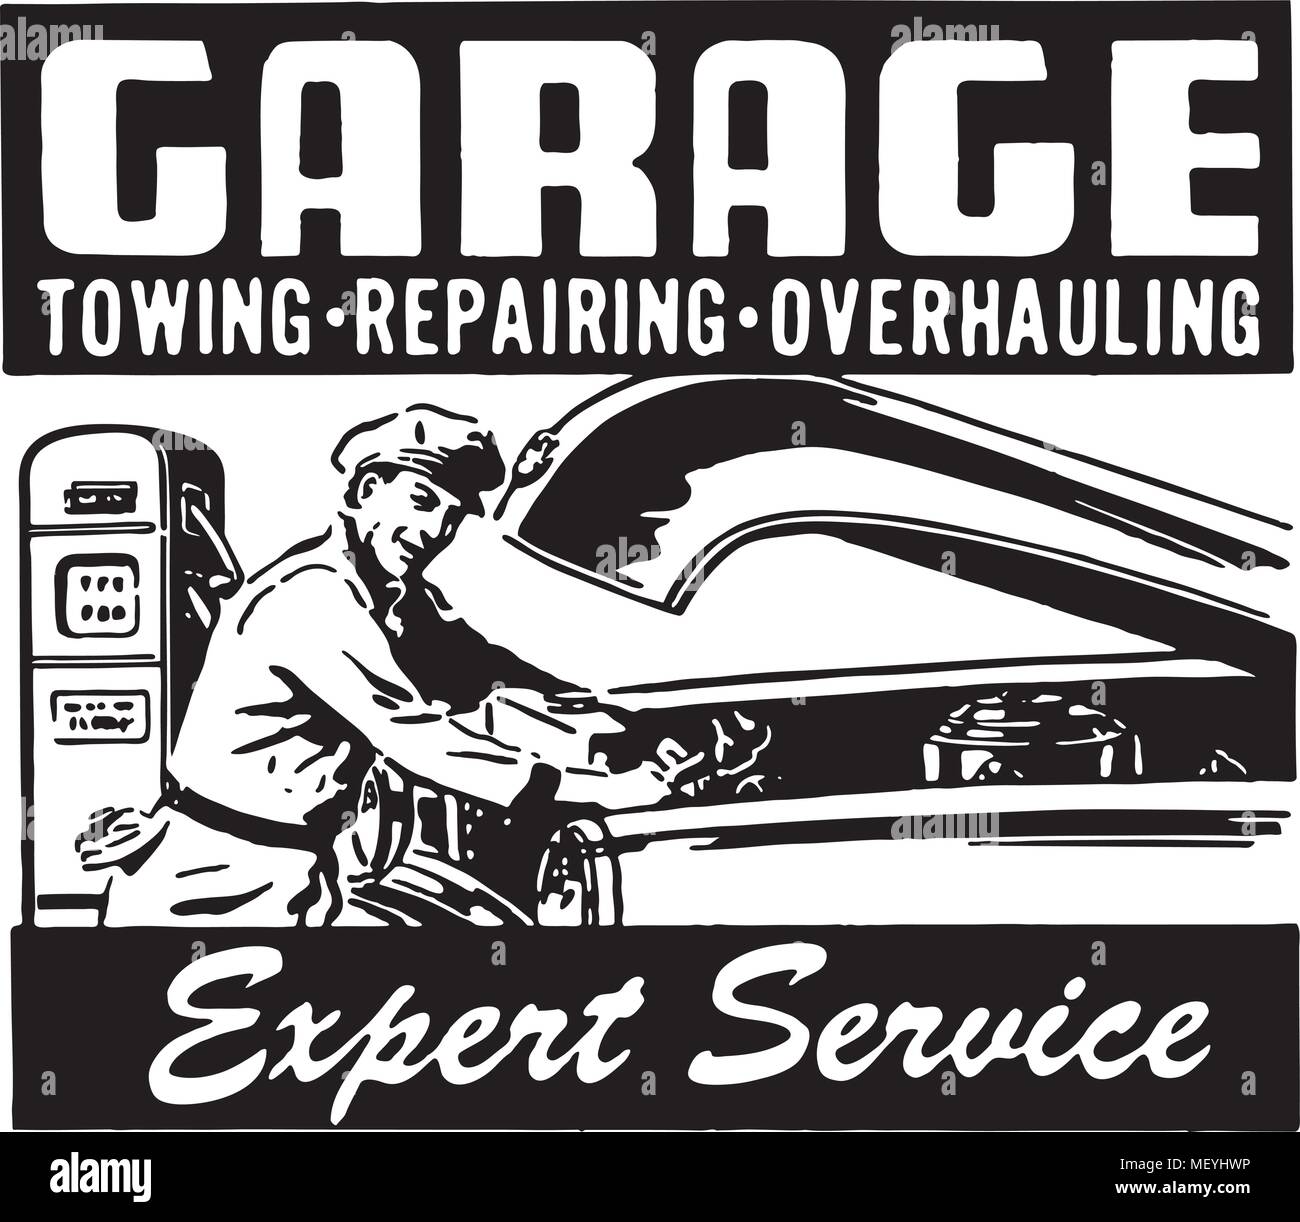 Garage Expert Service - Retro Ad Art Banner Stock Vector